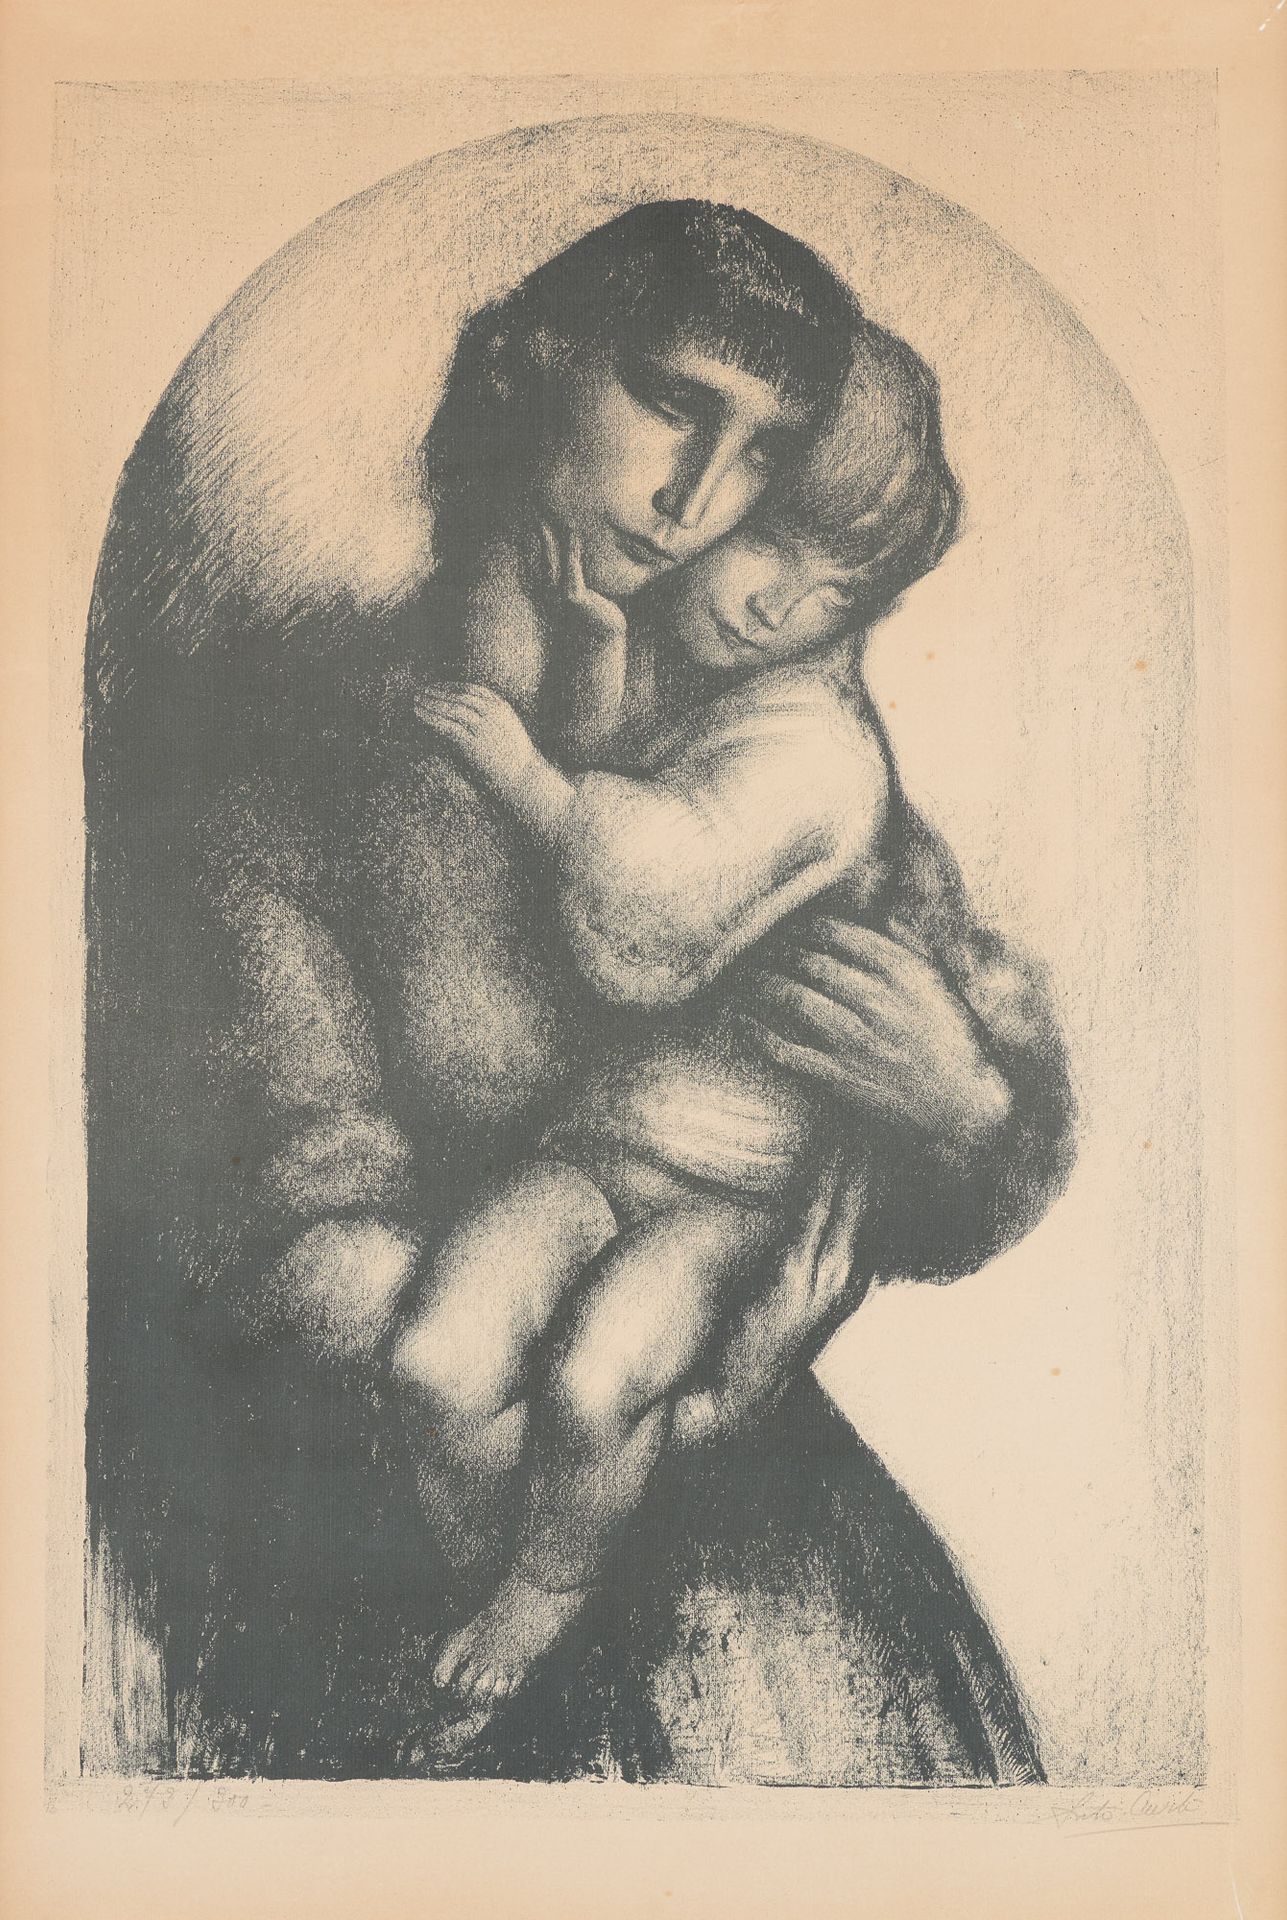 Anto CARTE École belge (1886-1954) 印刷品，纸上黑白石版画：母性。
签名：Anto Carte，印刷品证明3/300。
尺寸：&hellip;